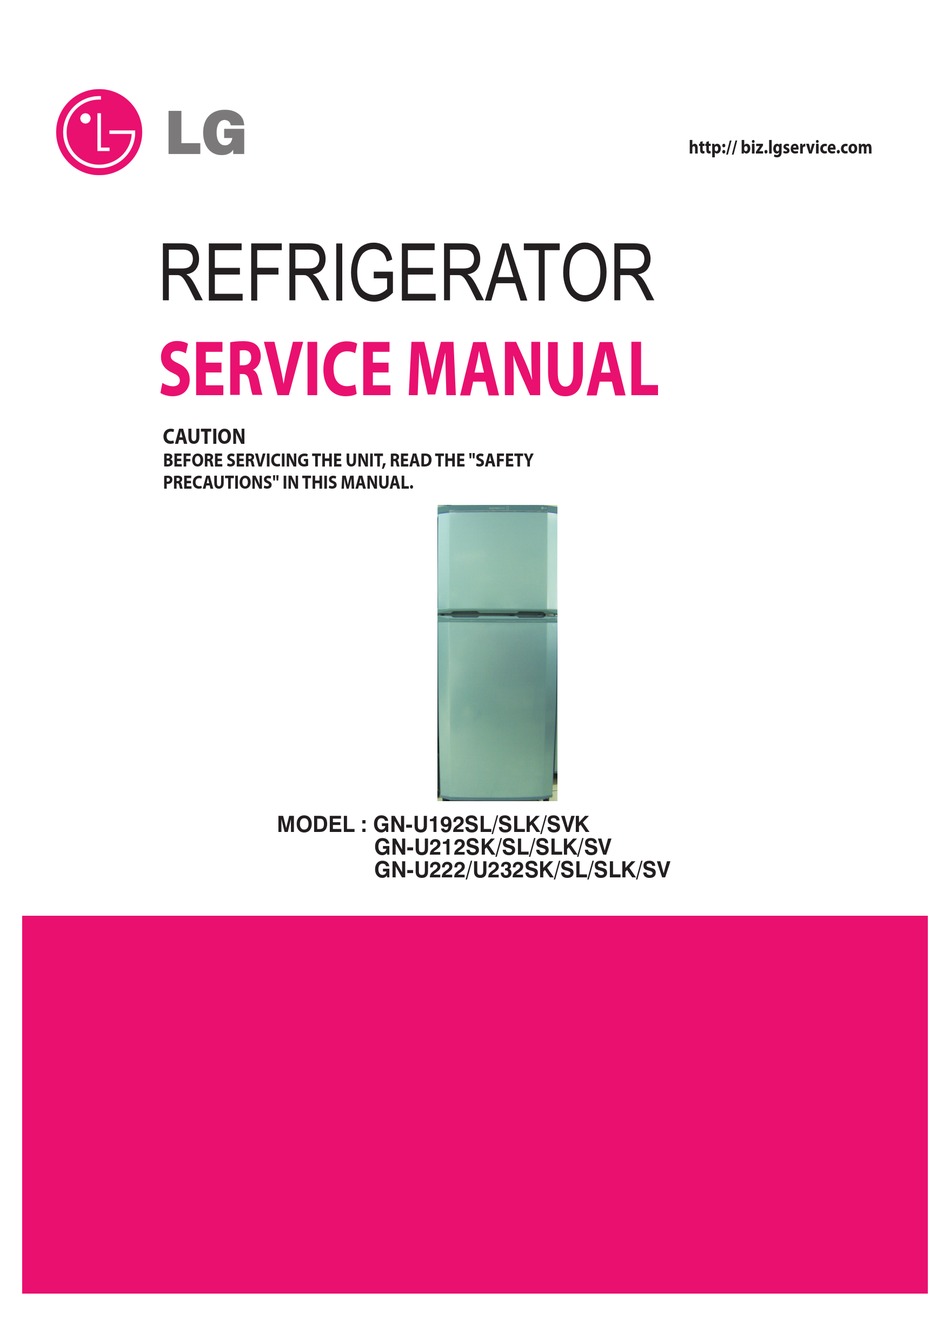 lg inverter refrigerator service manual pdf